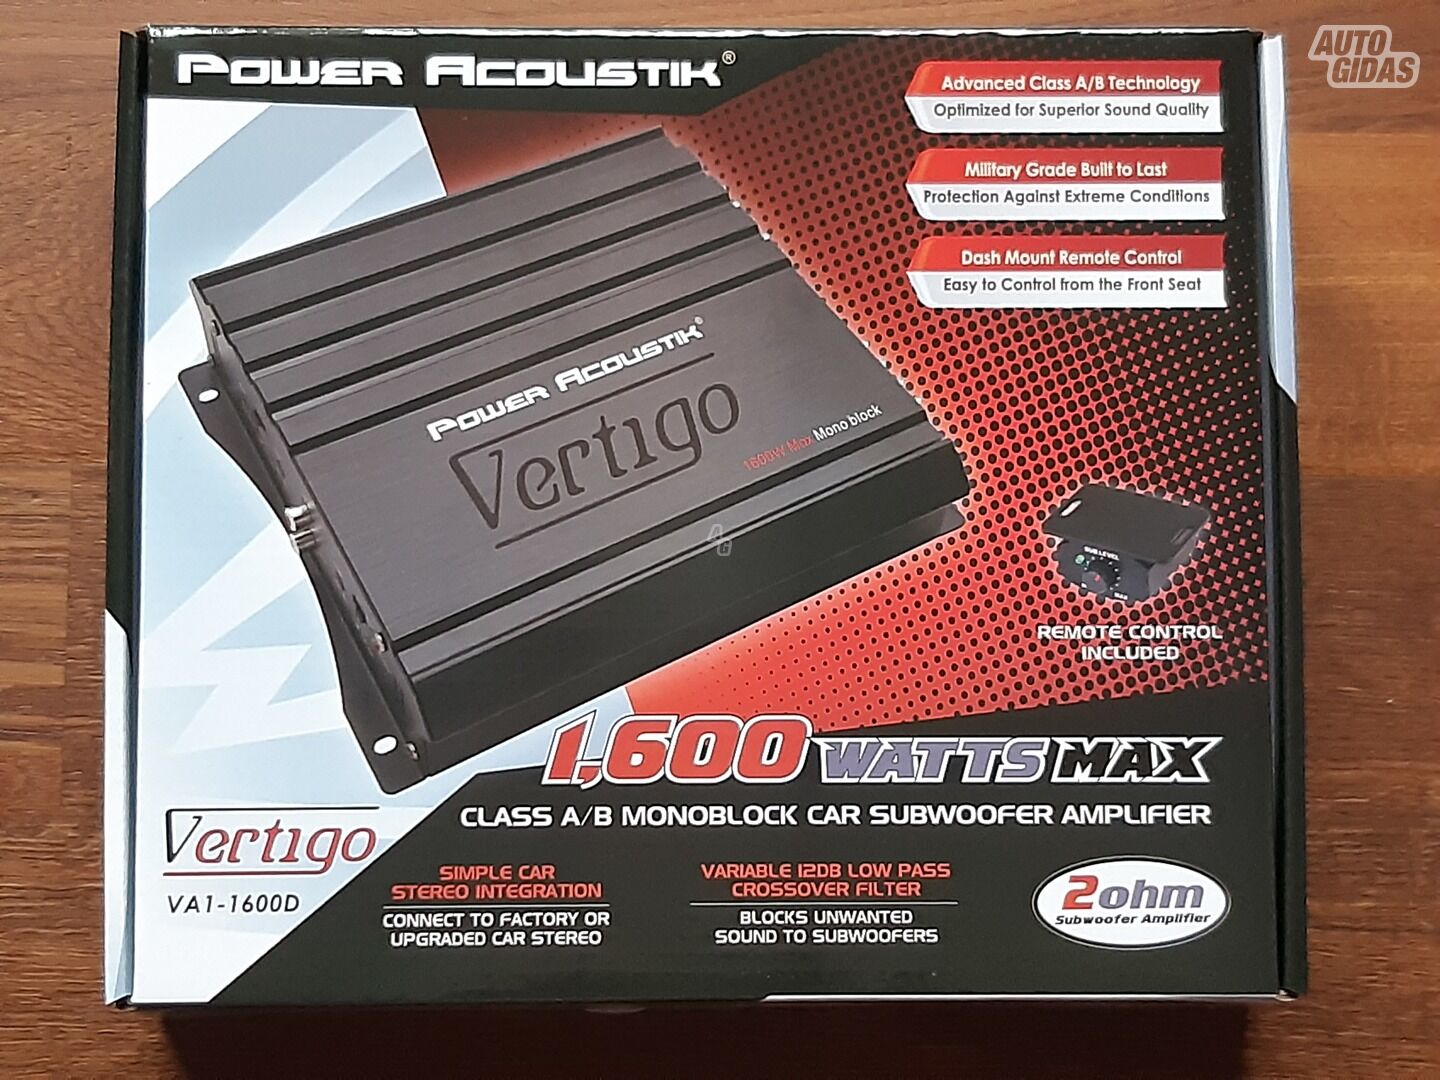 Power Acoustik Vertigo VA1-1600D Audio Amplifier | Advertisement